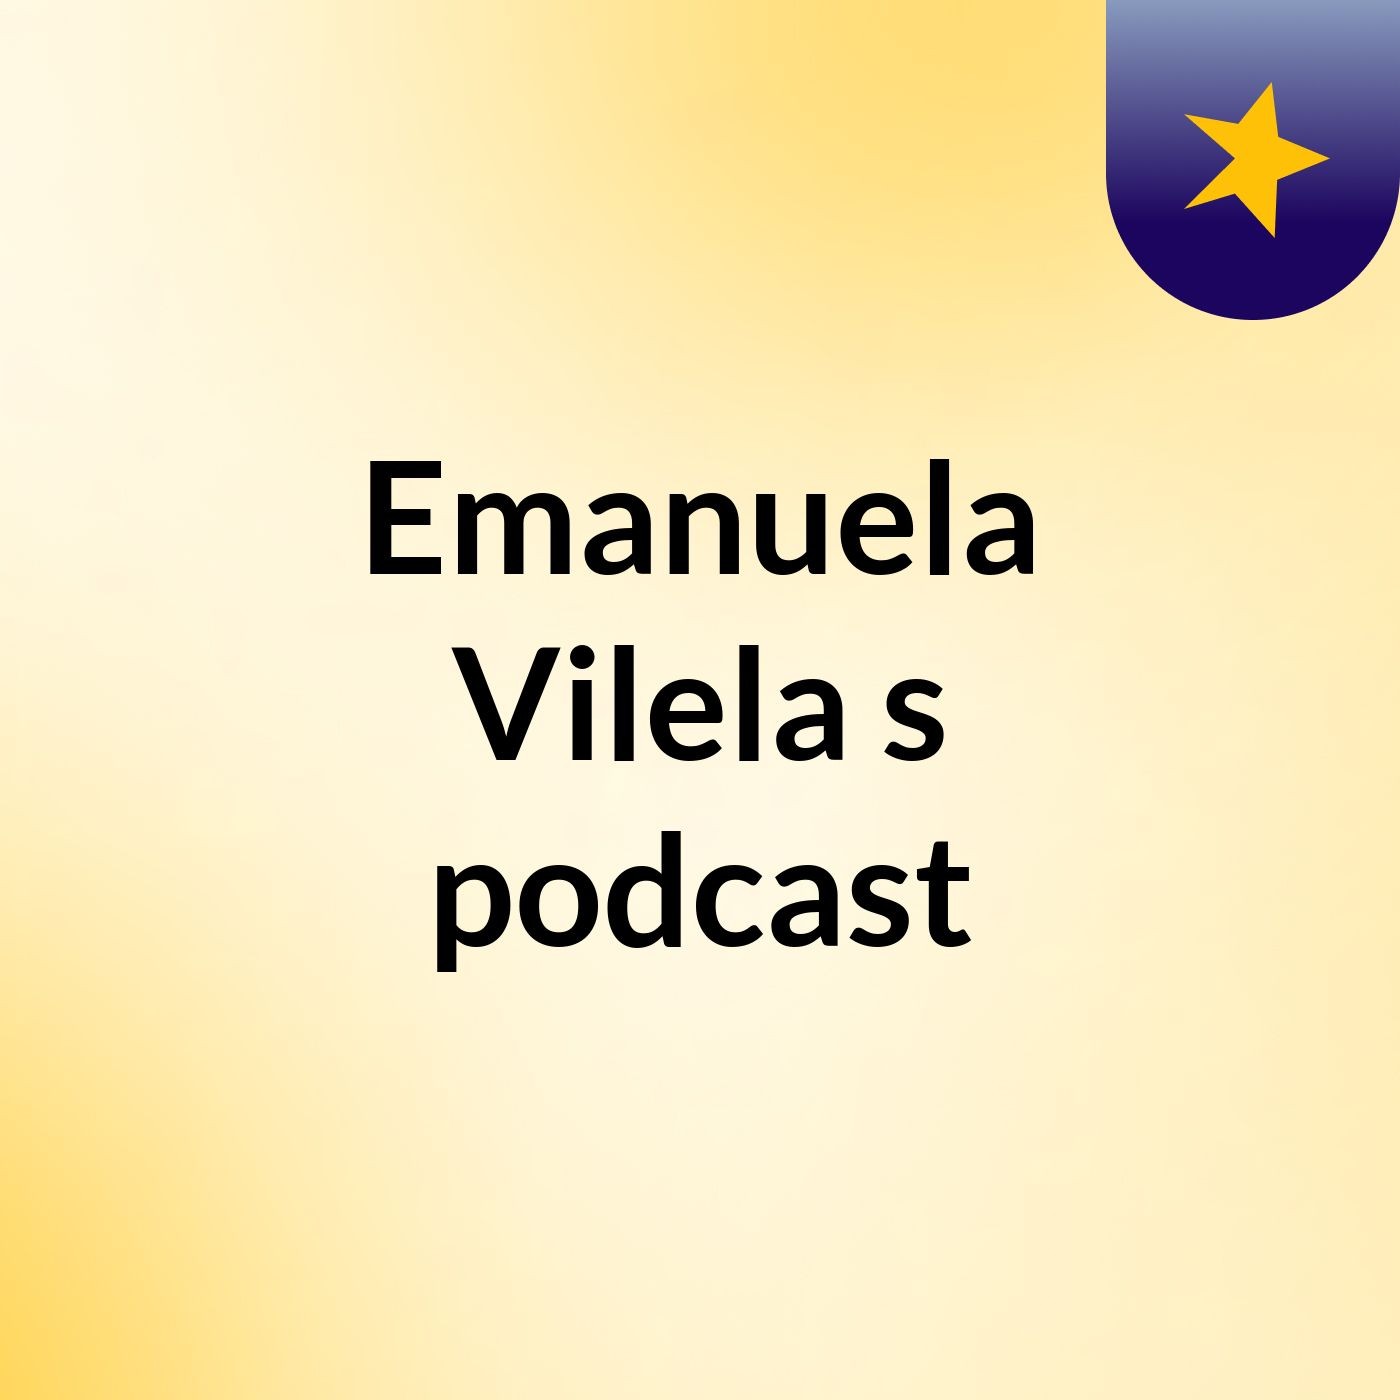 Emanuela Vilela's podcast